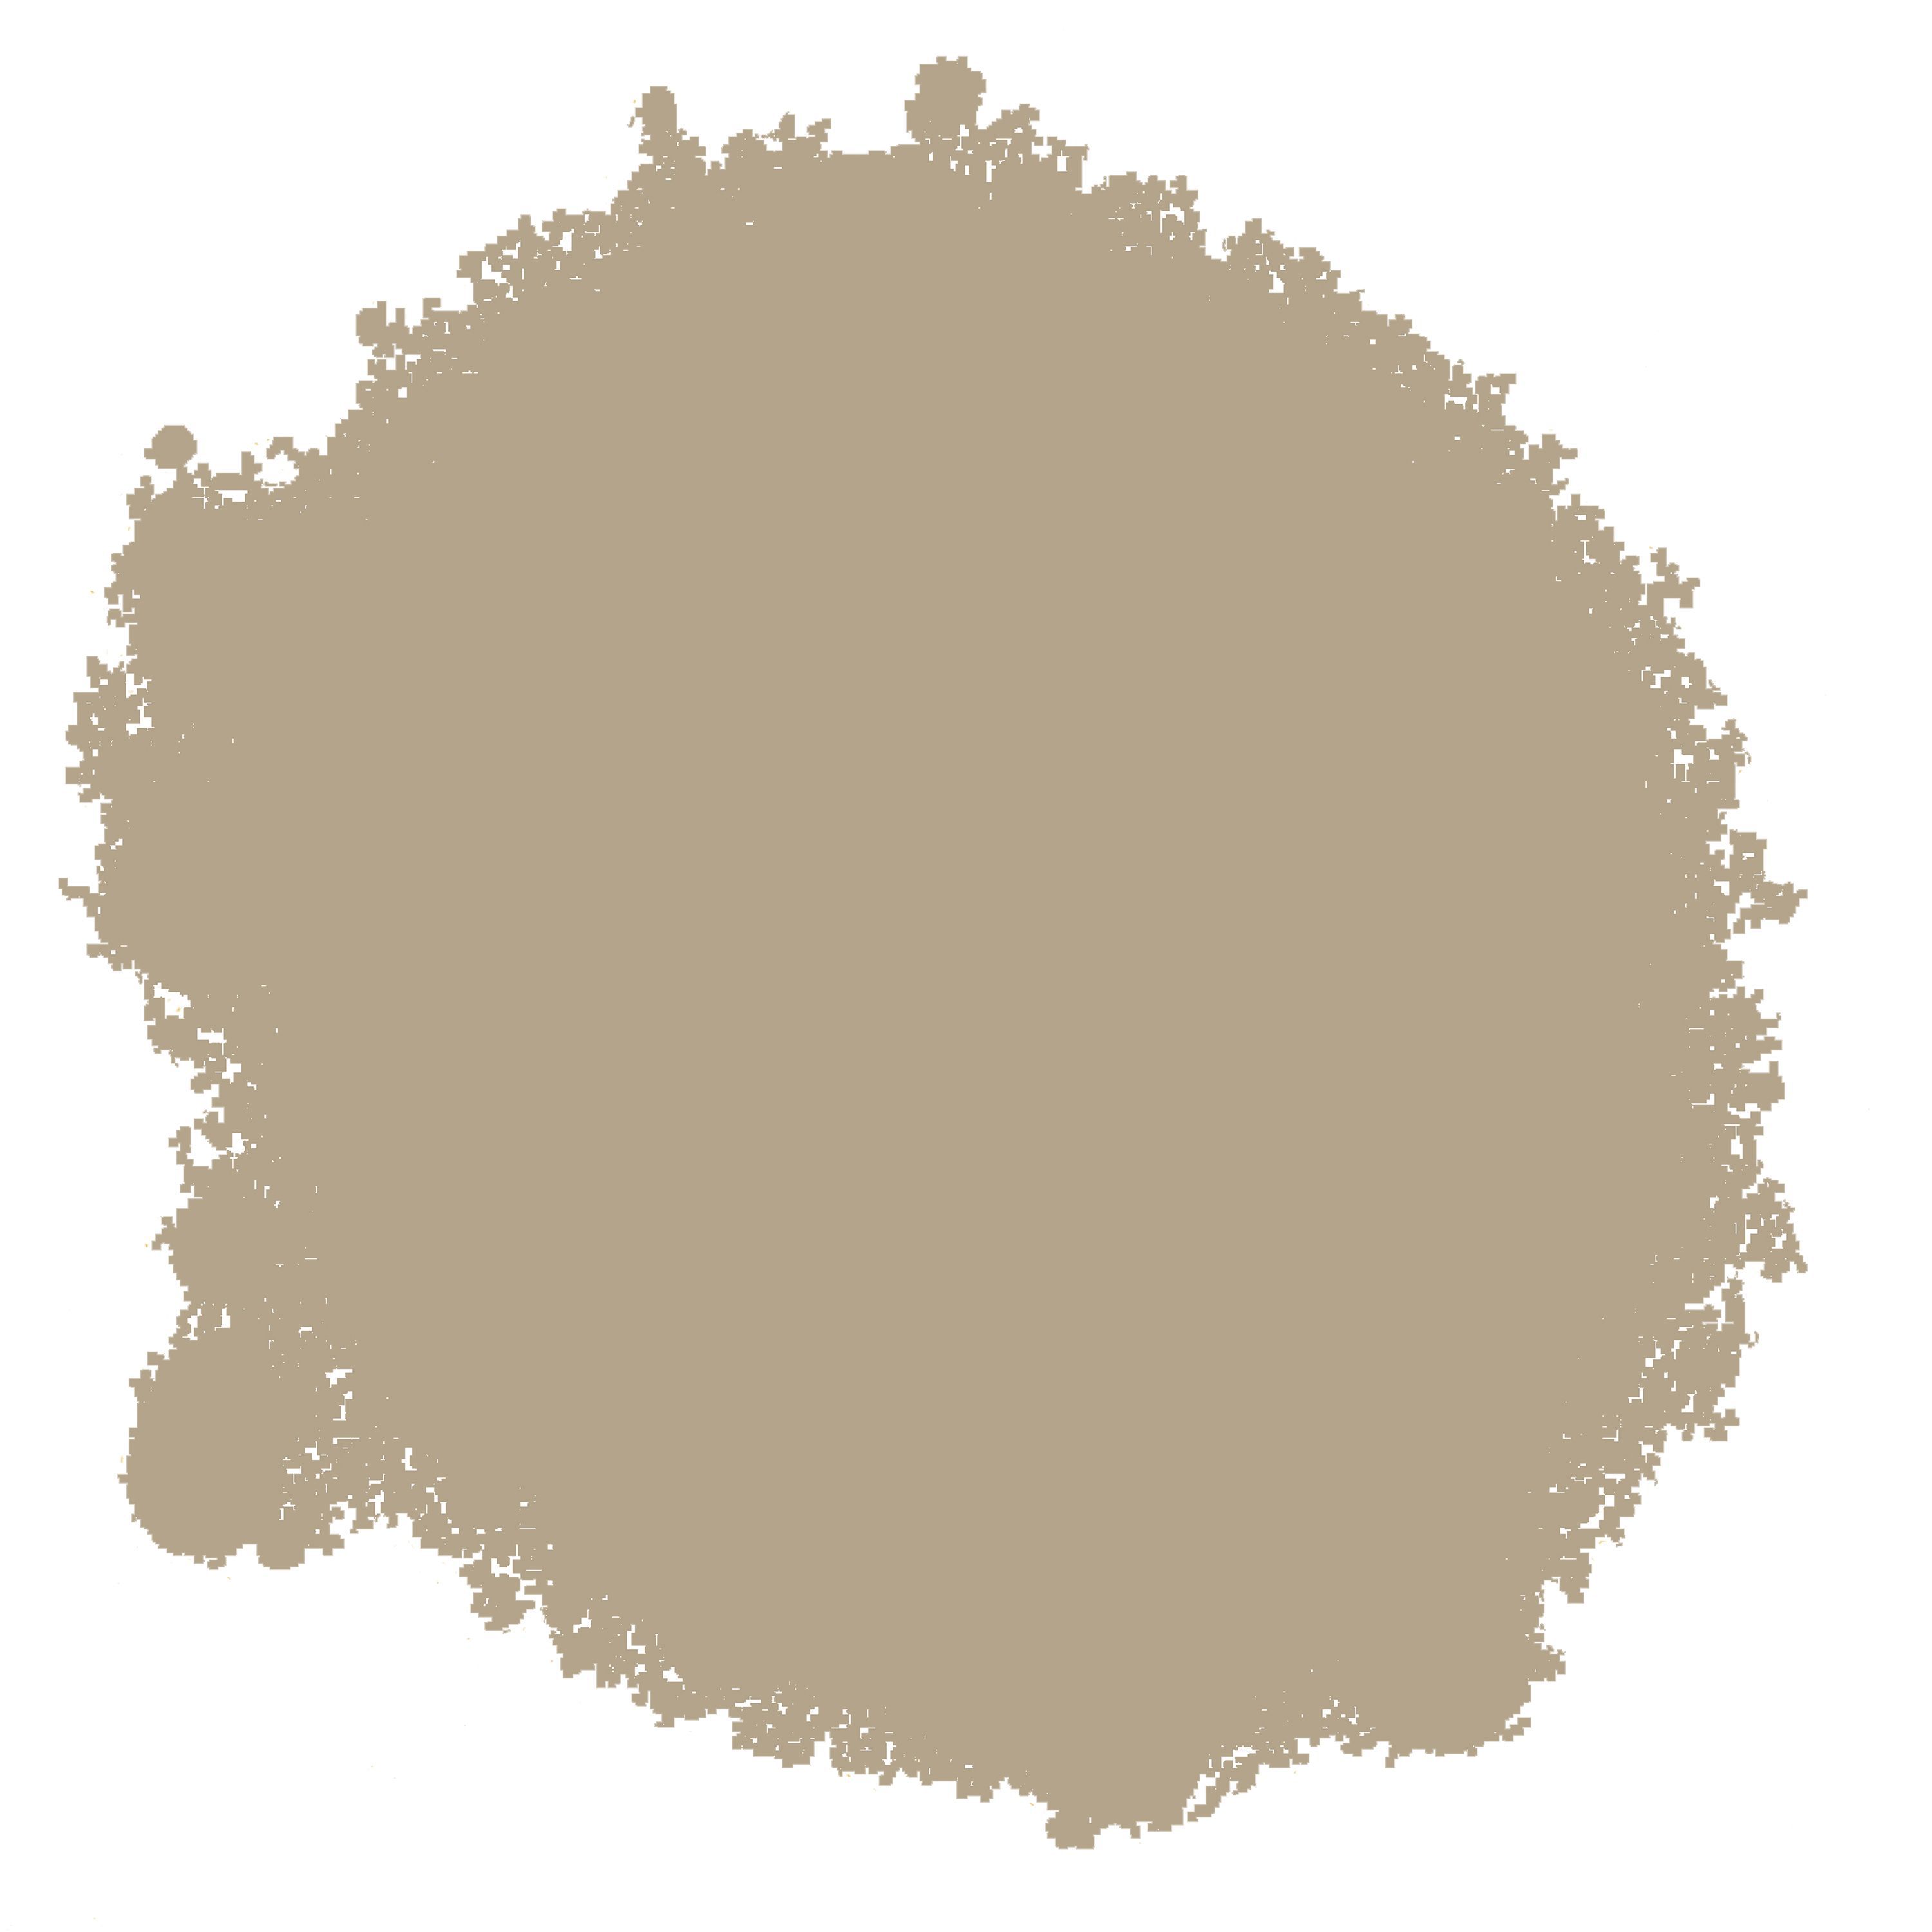 Rust-Oleum White gold effect Spray paint, 400ml